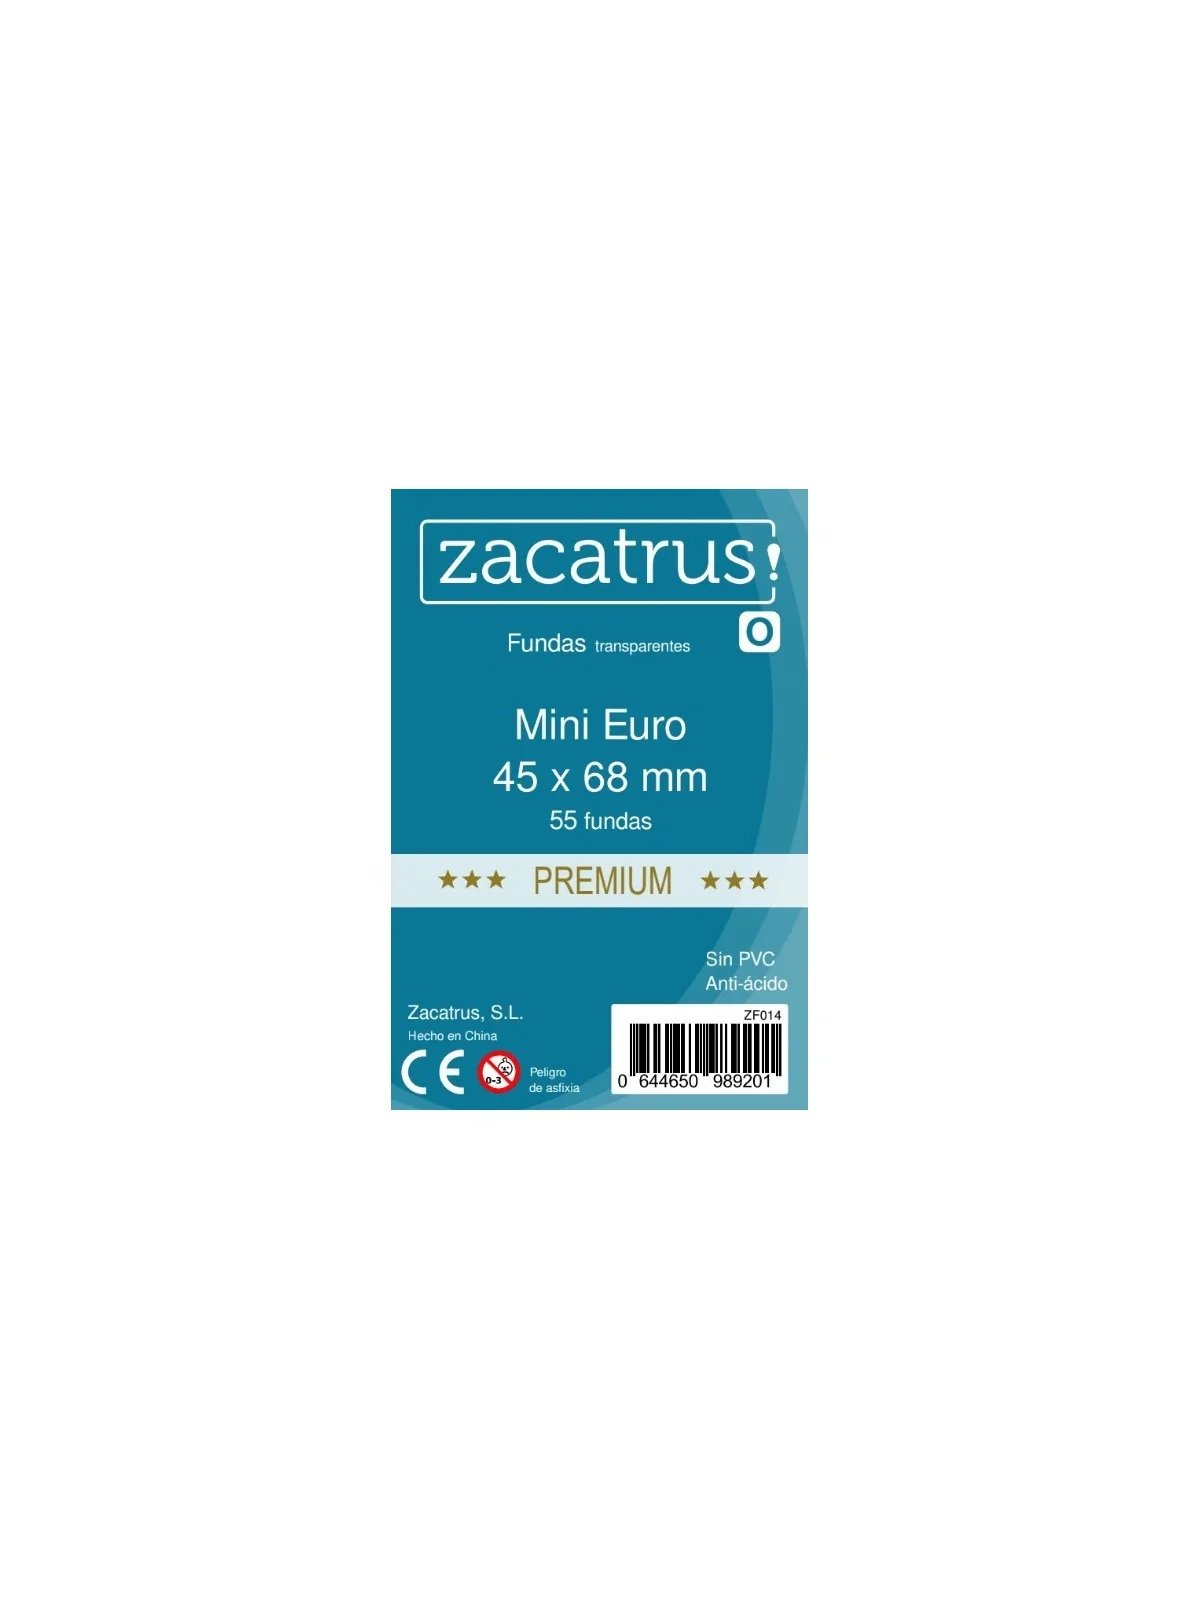 Comprar Fundas Zacatrus Mini Euro Premium (45mm x 68mm) (55 uds) barat